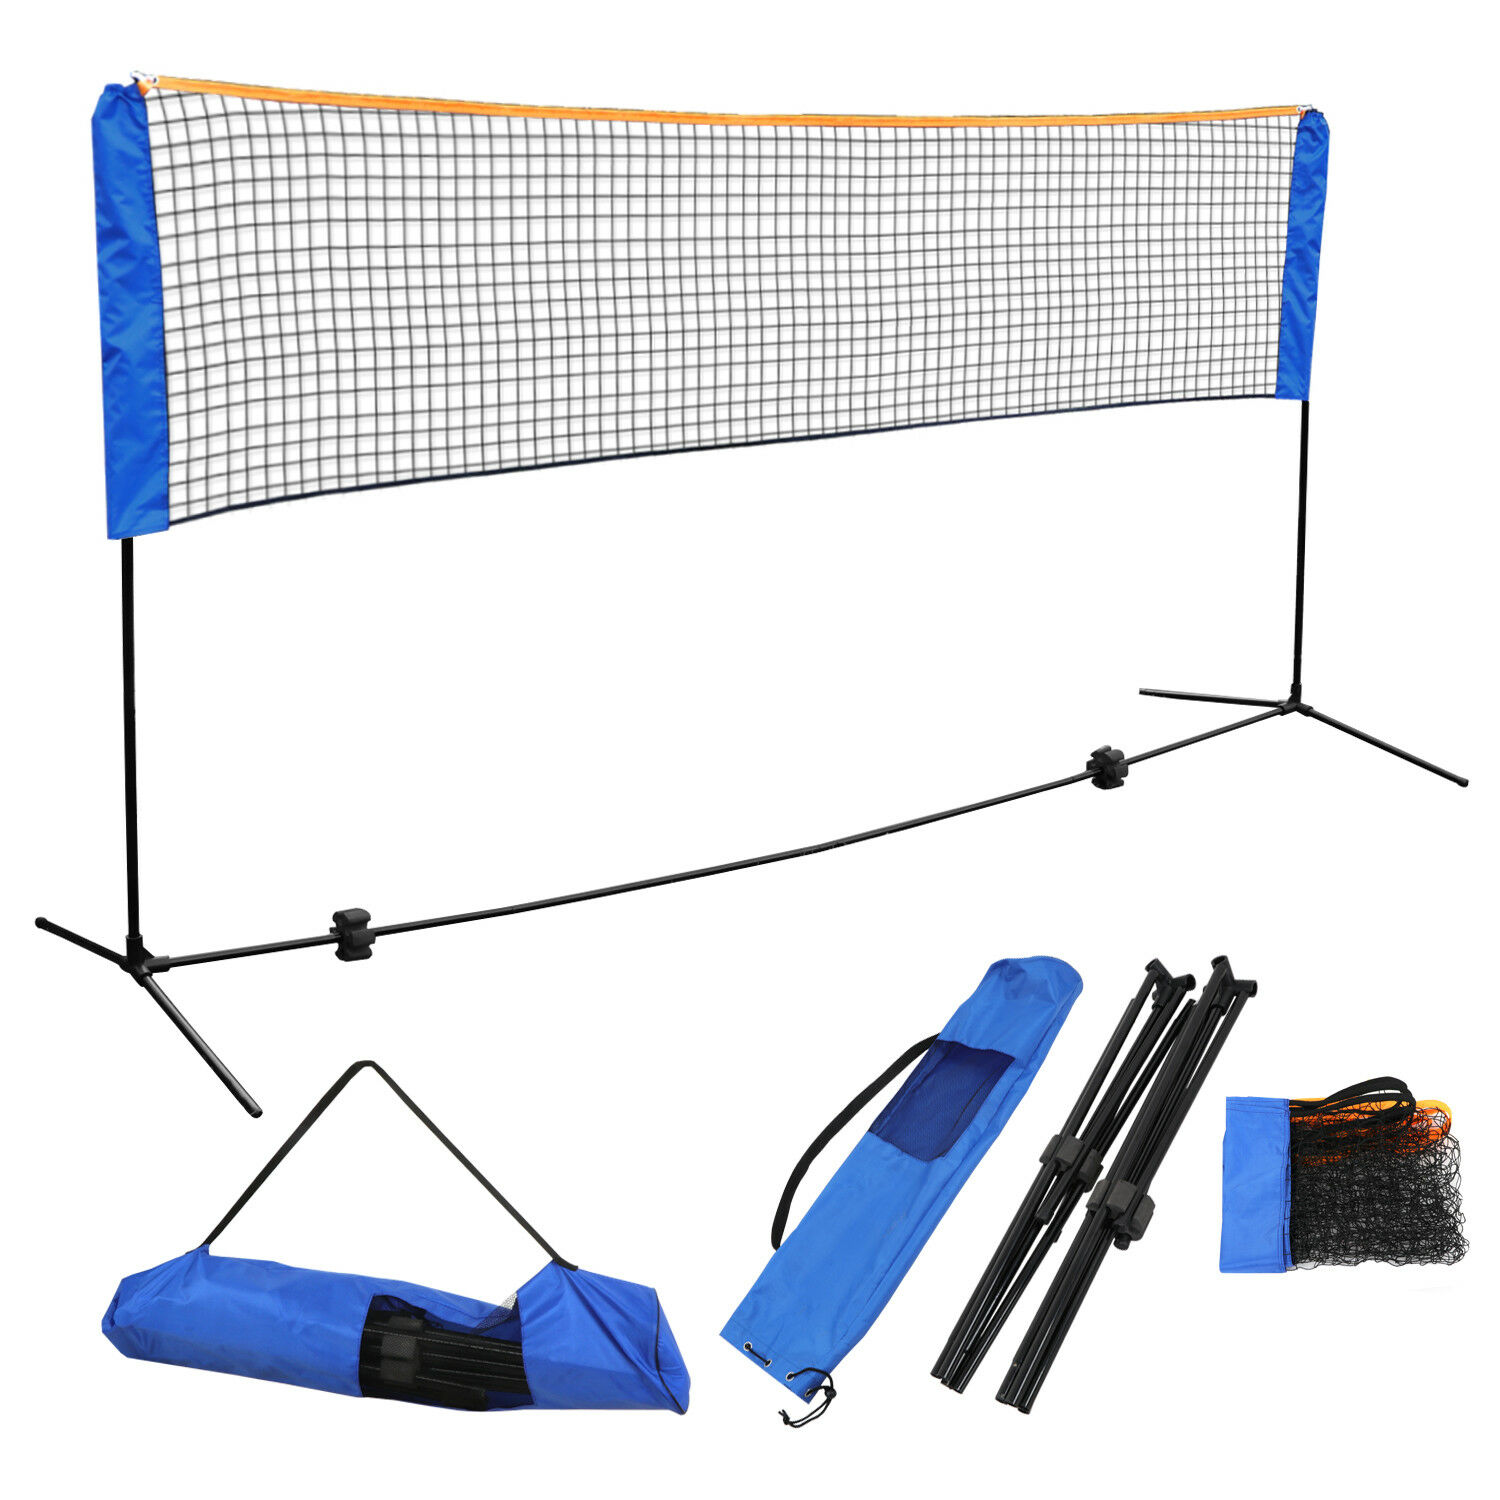 10' X 5' Badminton Volleyball Tennis Net Adjustable Height Sport Train Portable